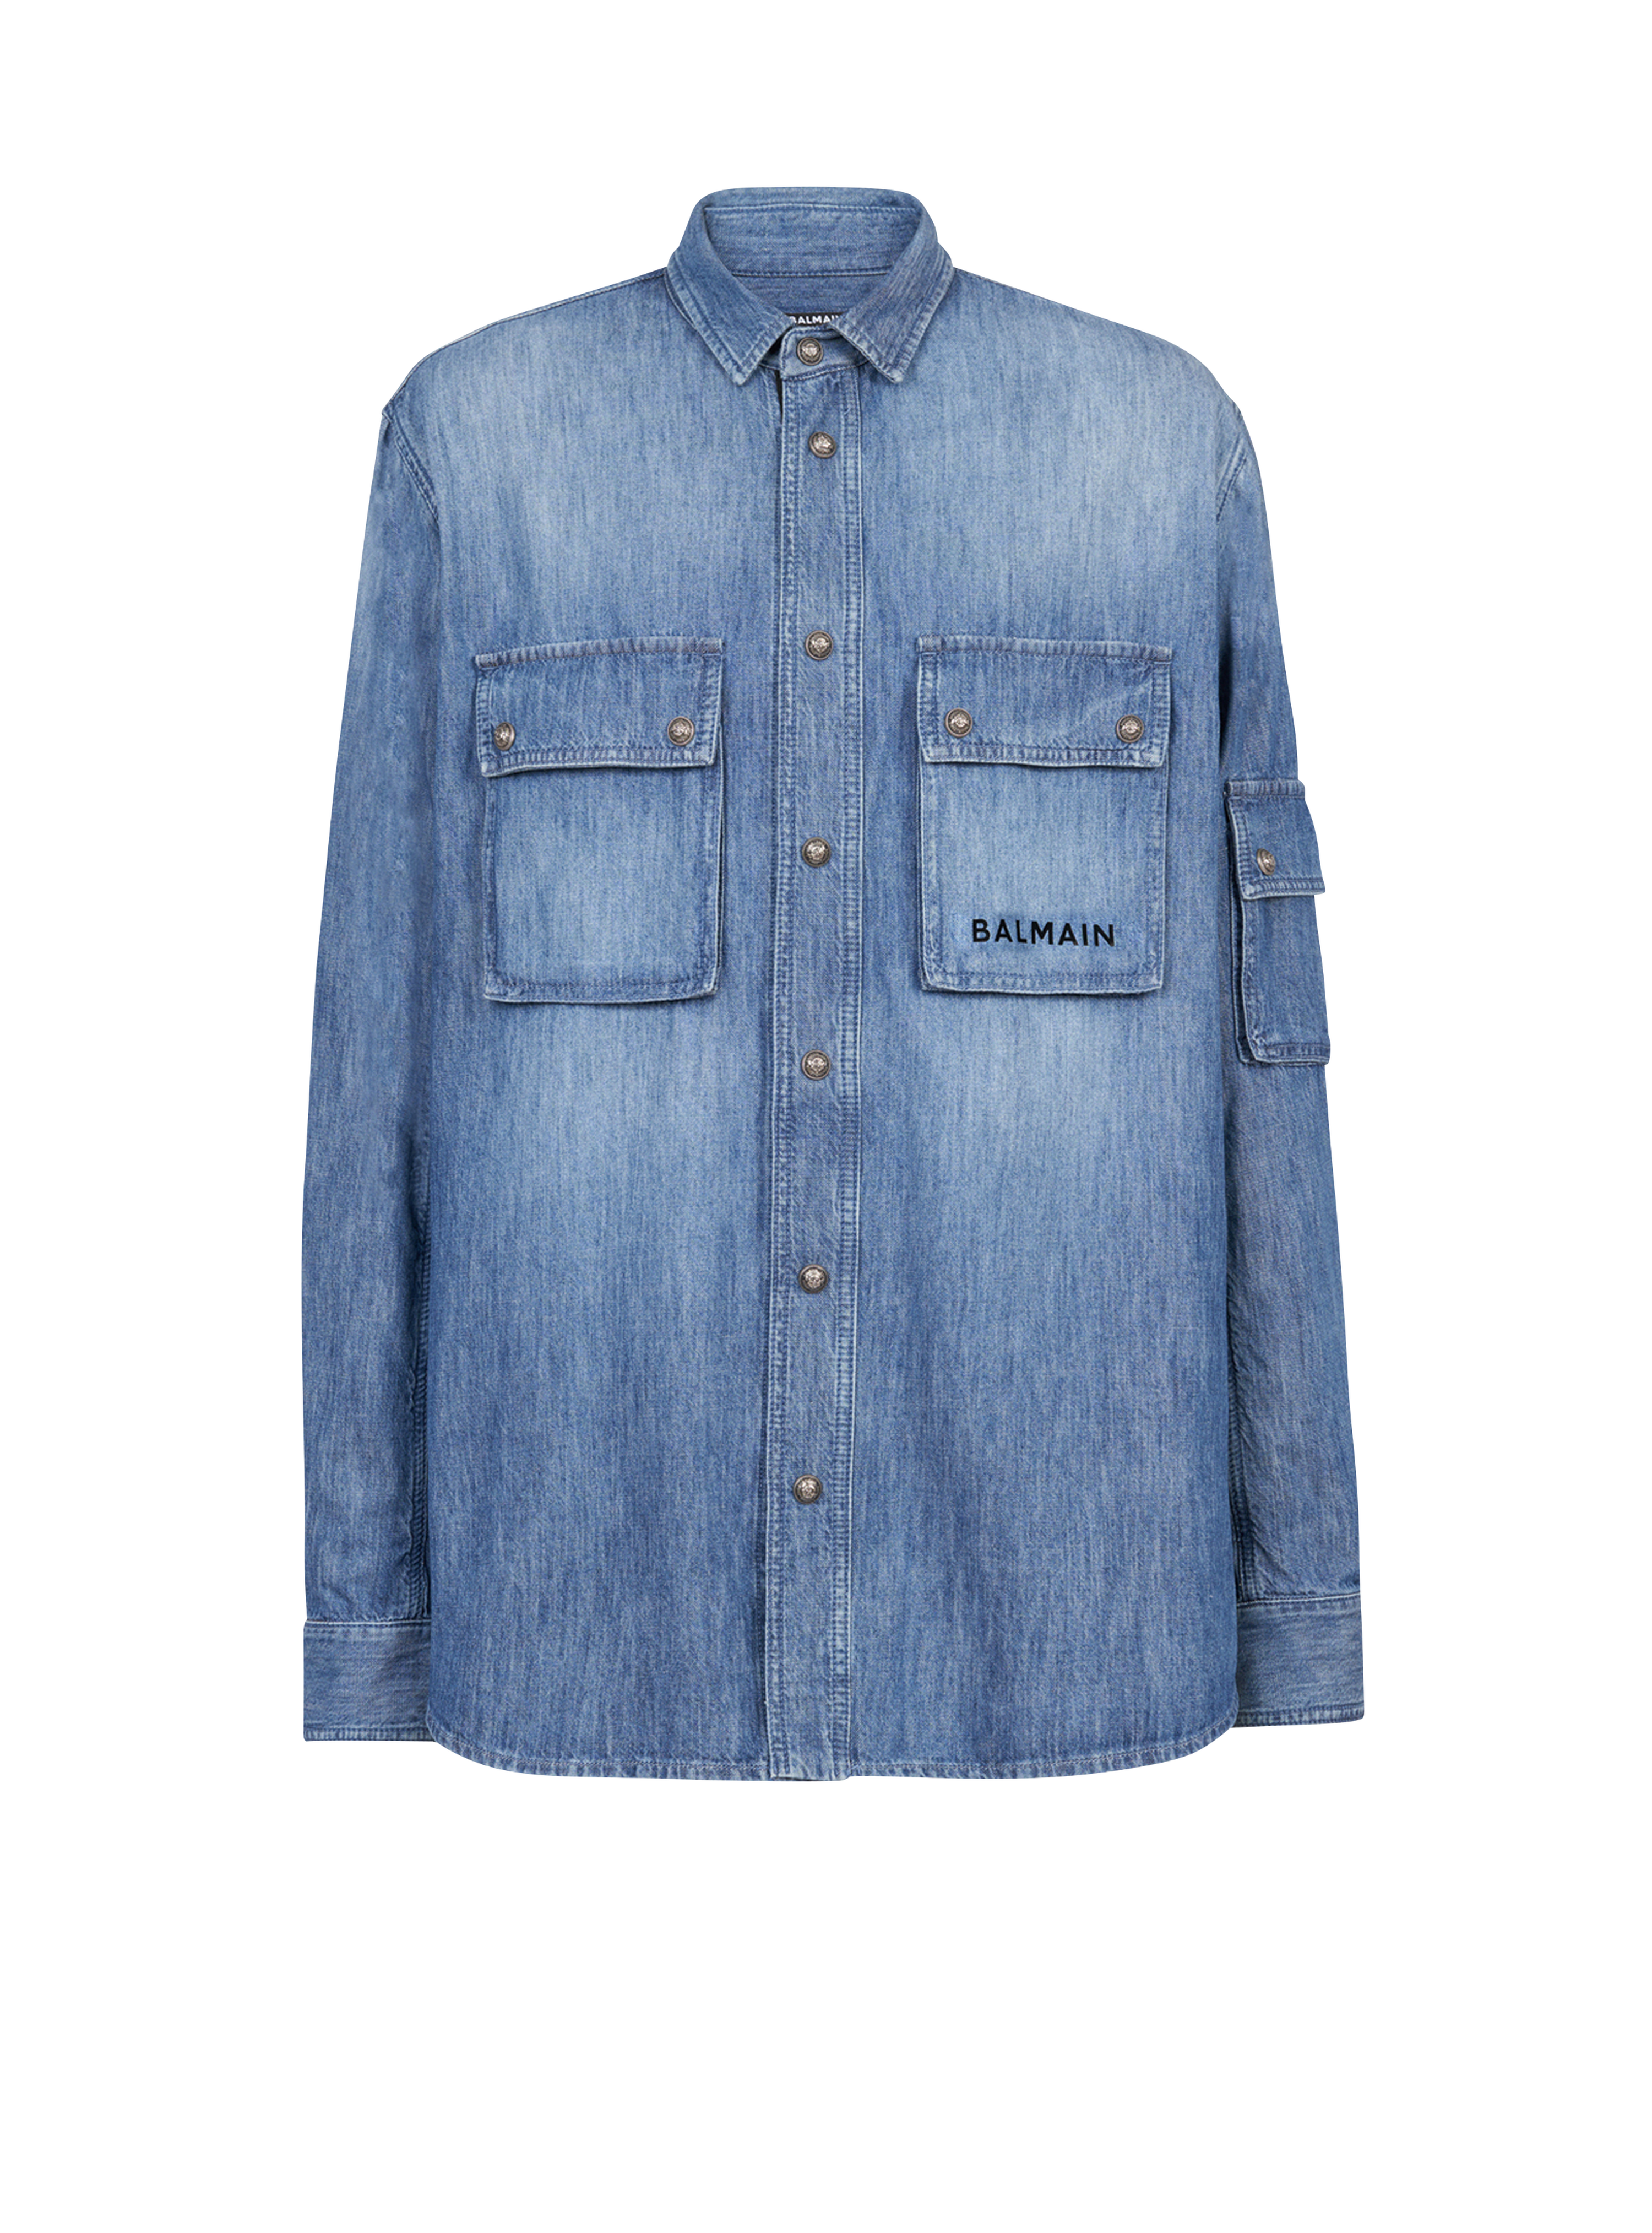 Denim shirt with logo Balmain, blue